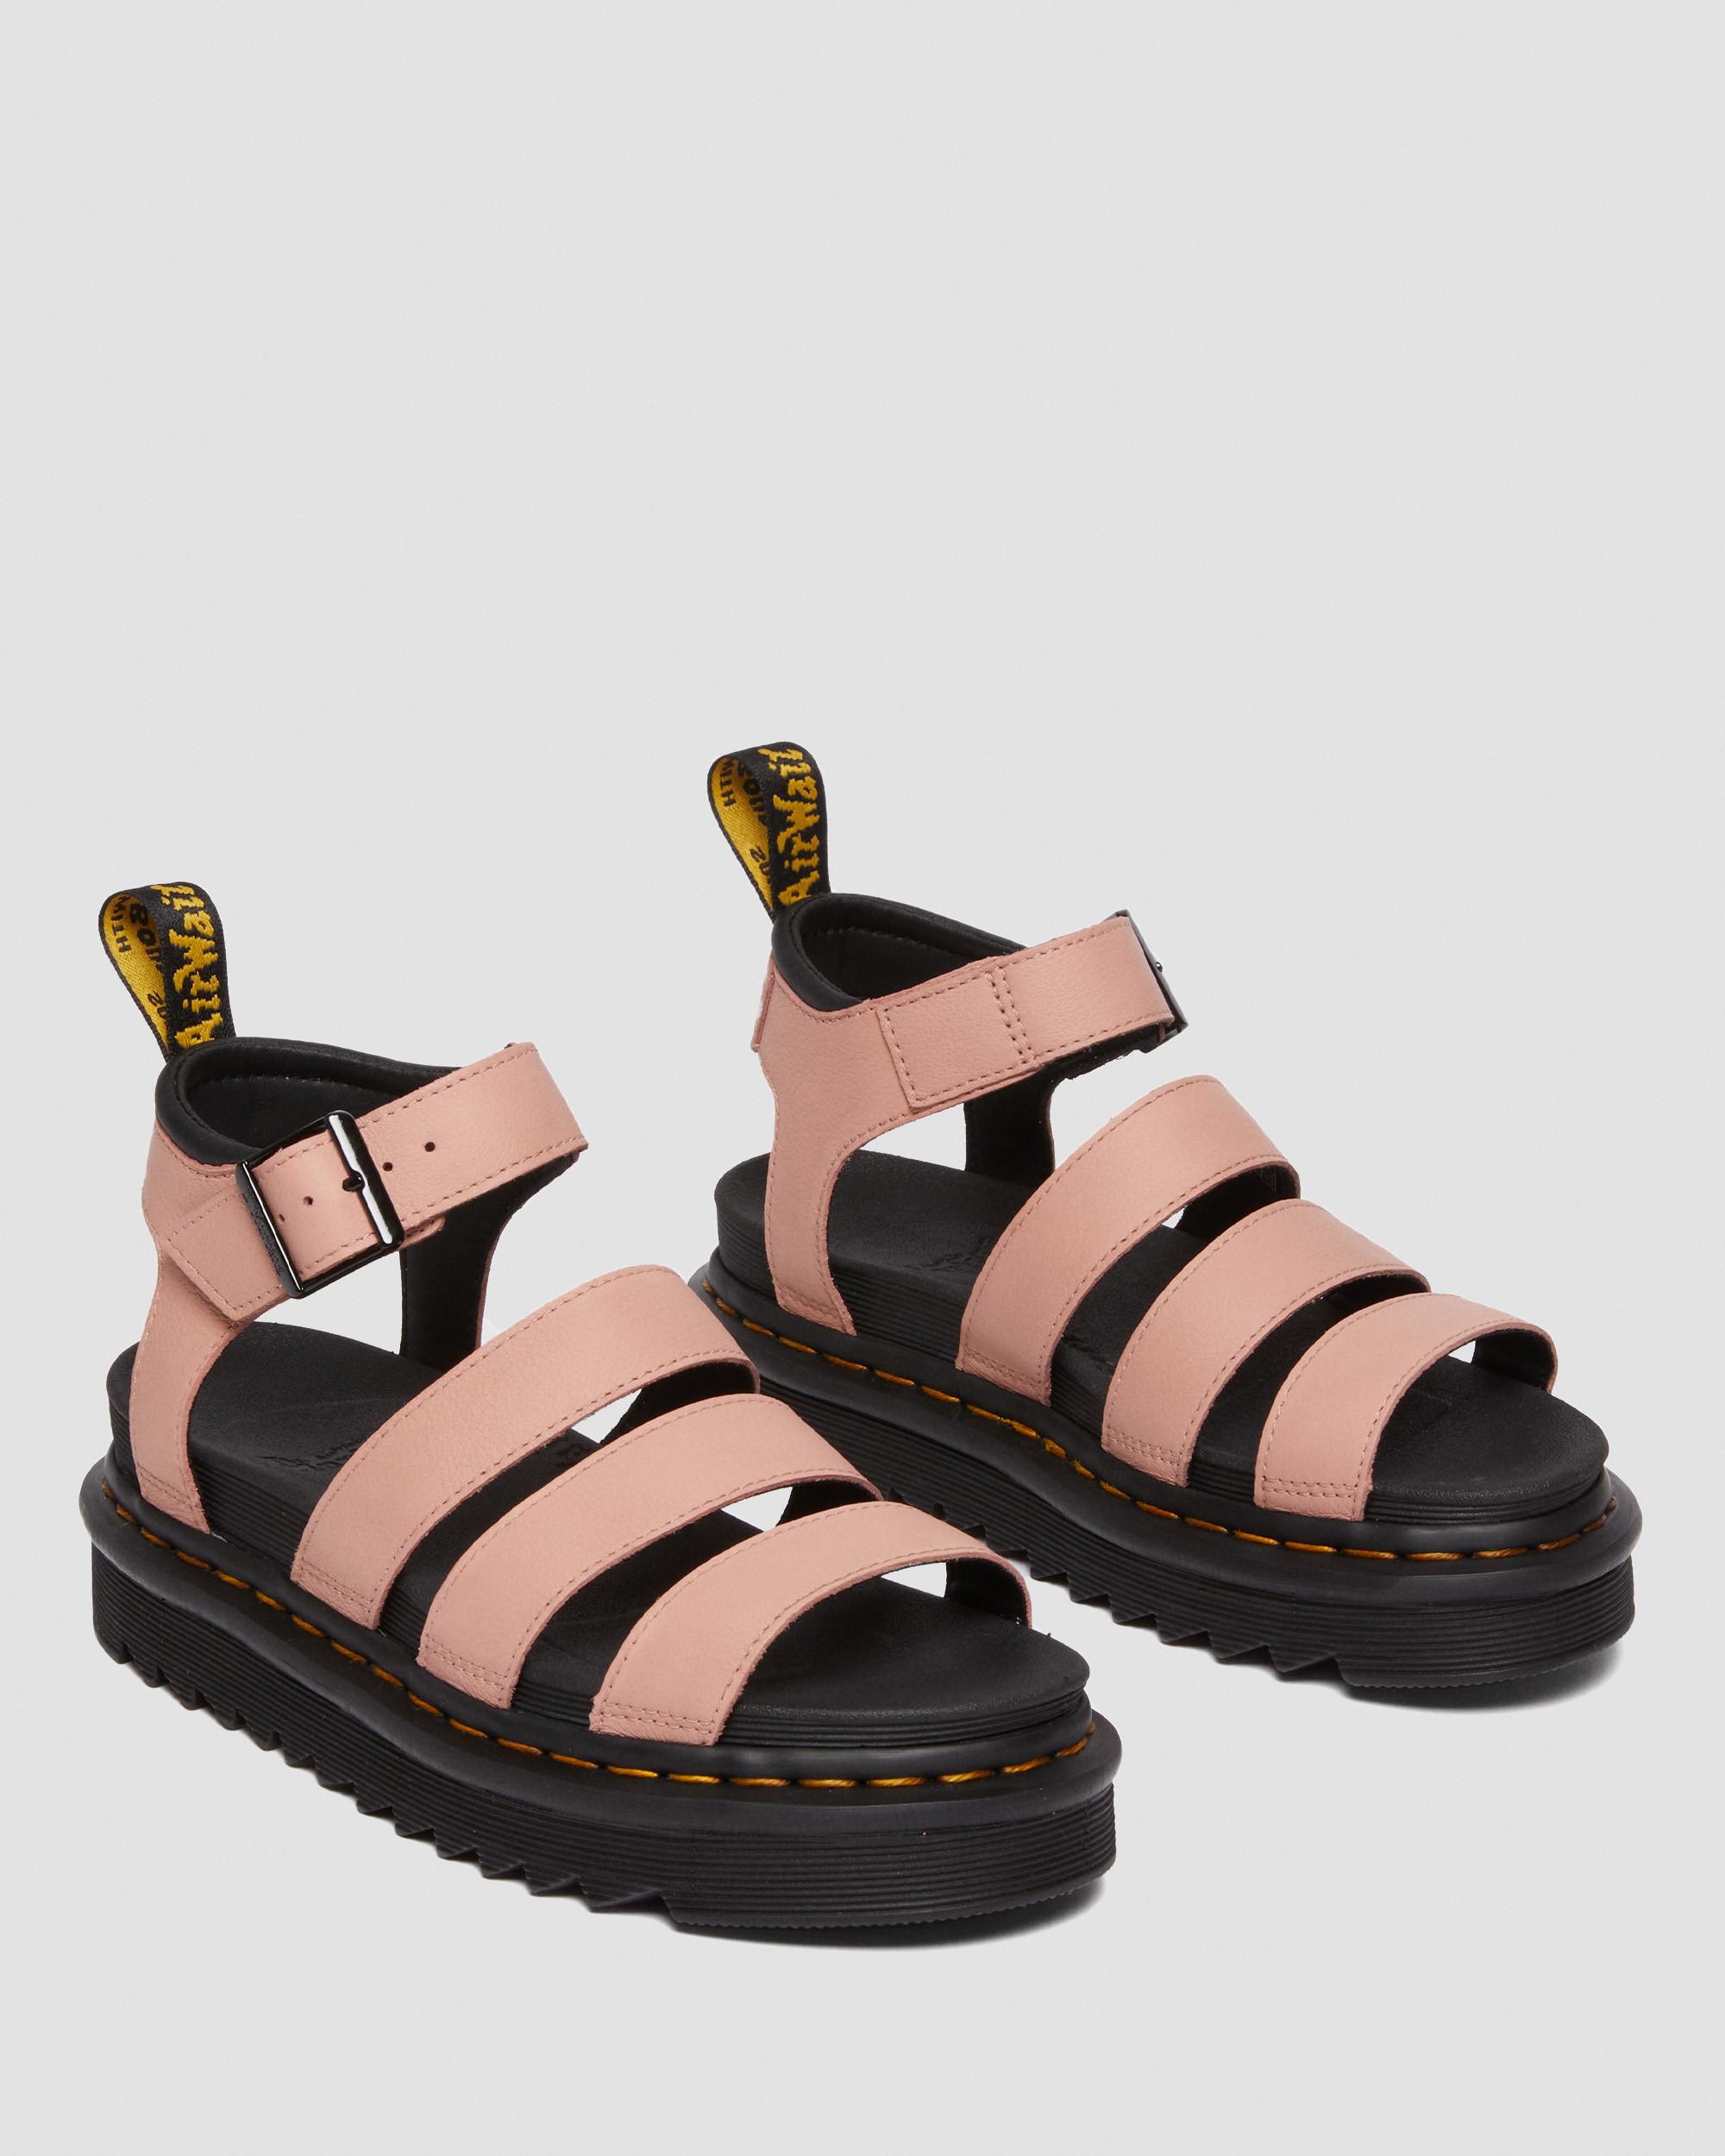 Blaire Pisa Leather Strap Platform Sandals in Peach Beige | Dr. Martens